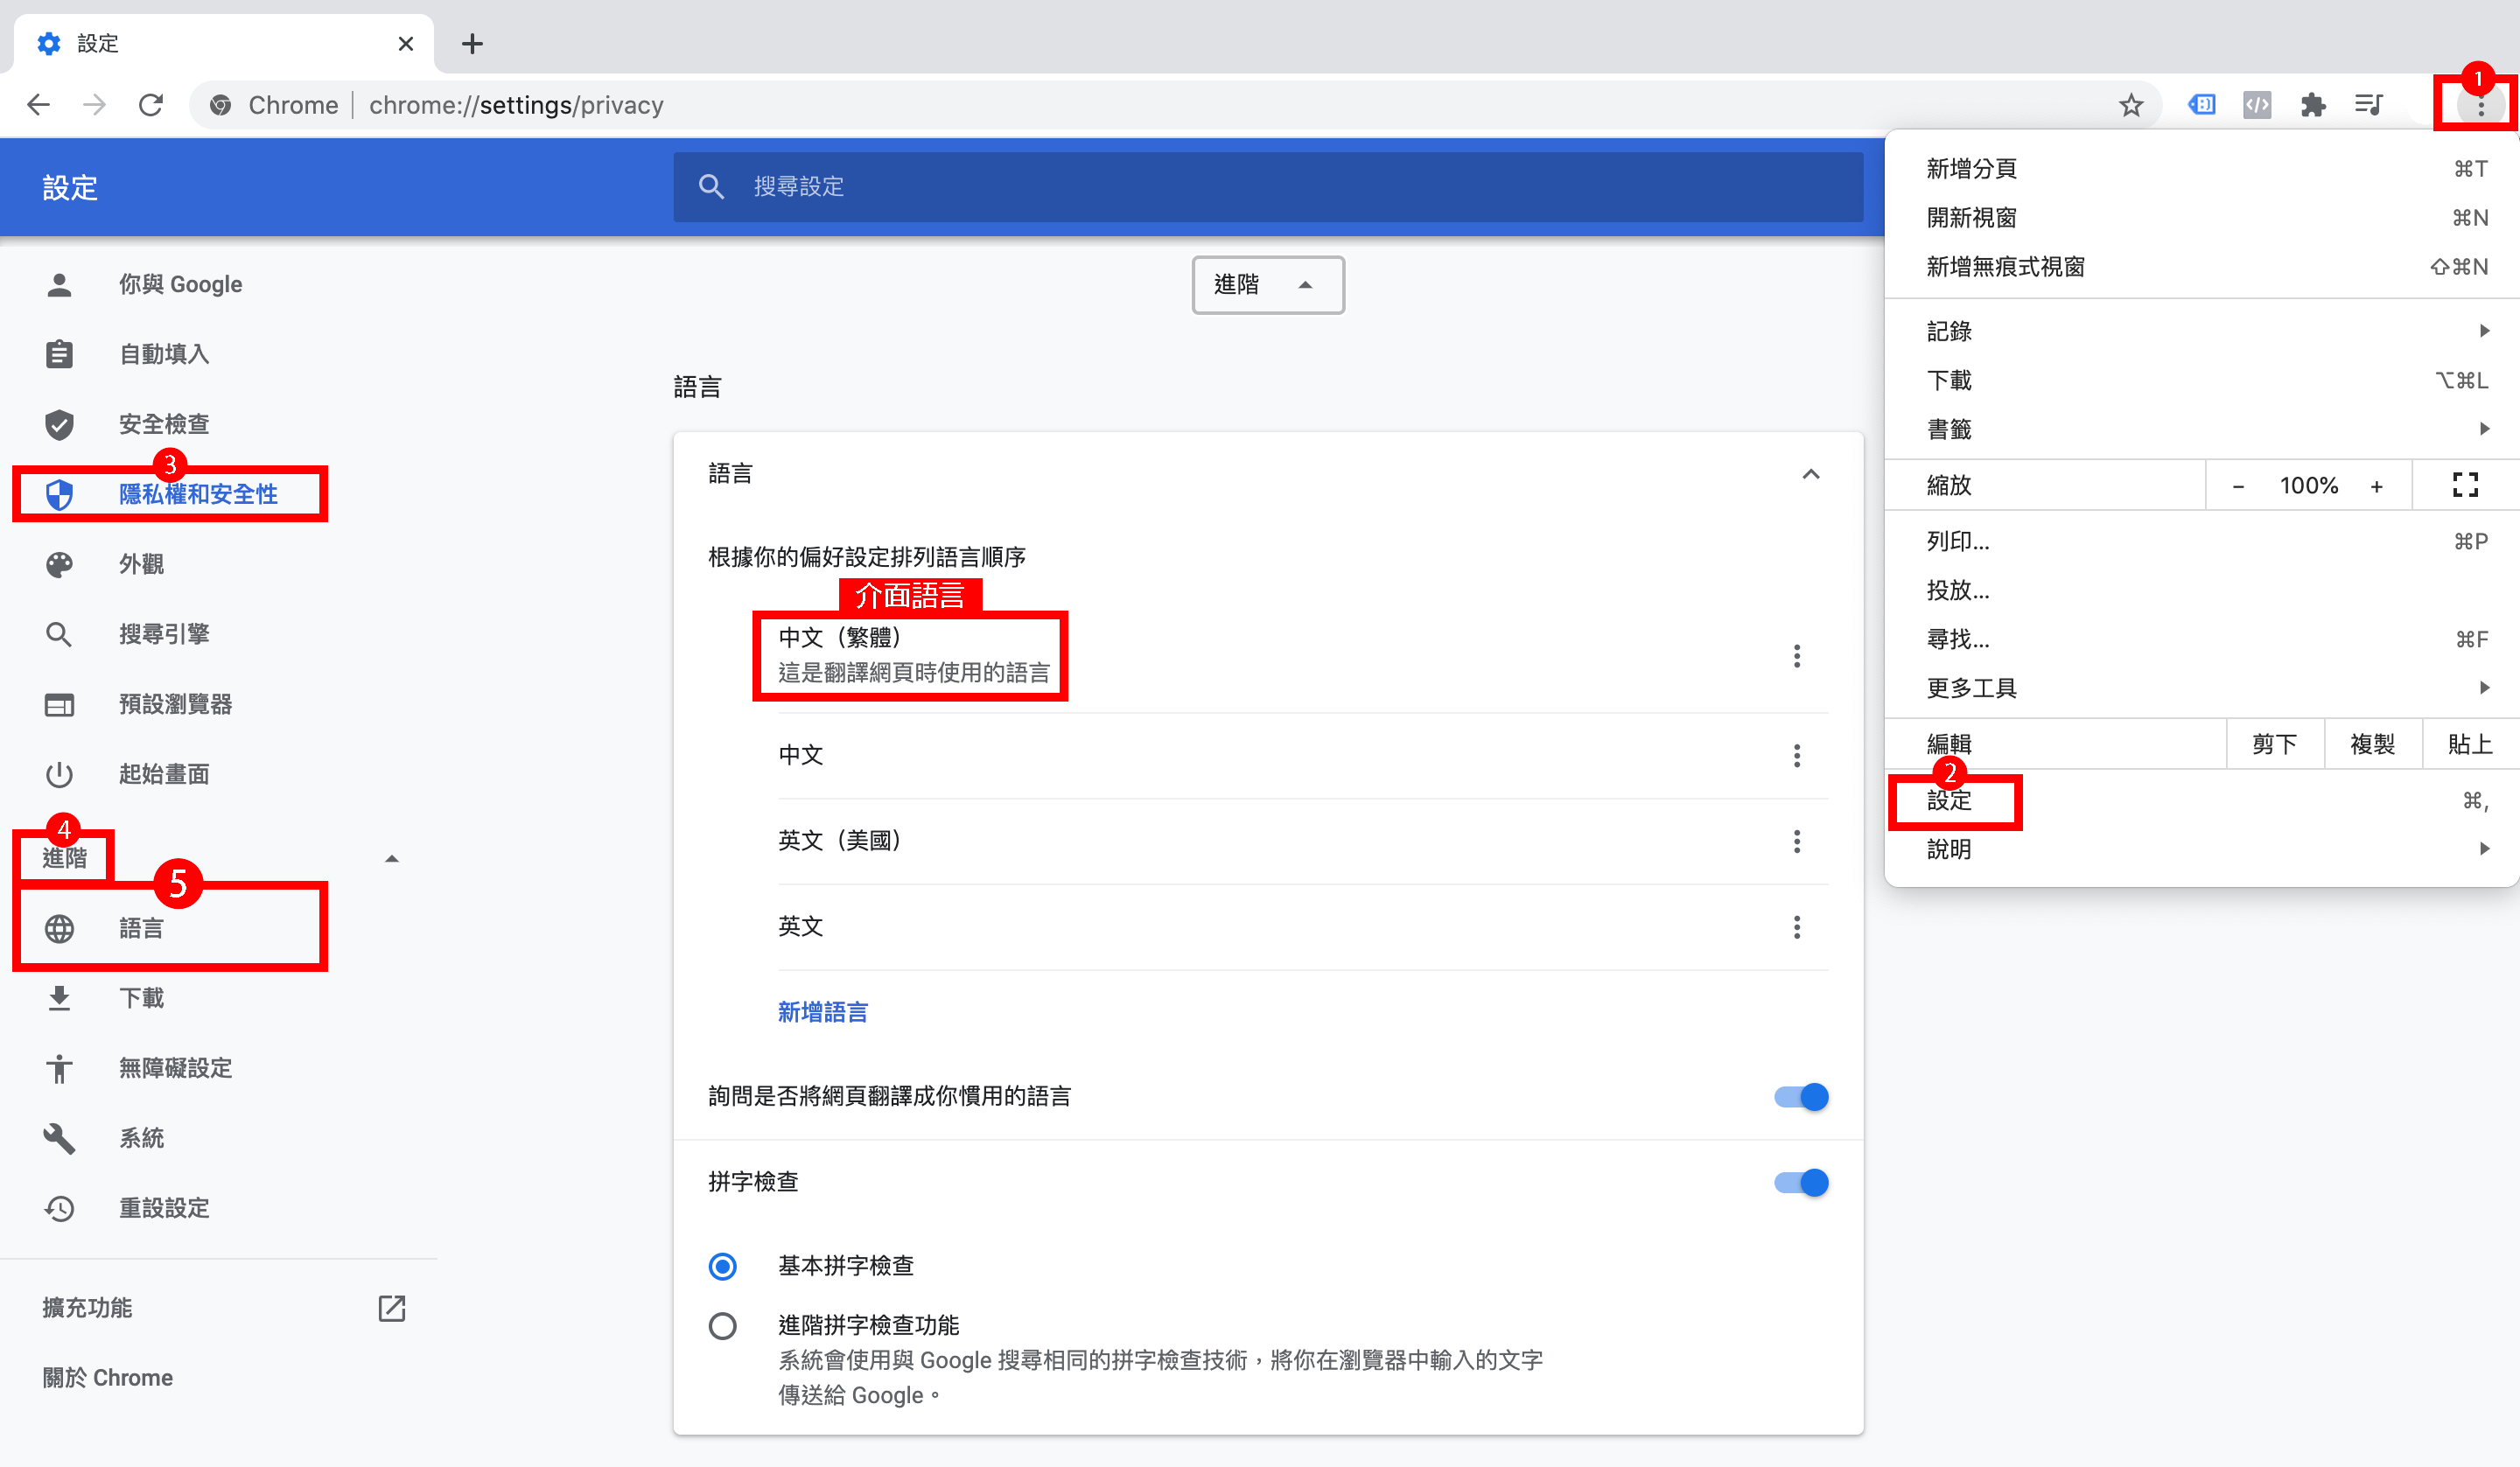 LINE Tag Helper 如何安裝？
確認 Chrome 瀏覽器介面語言設定為「繁體中文」